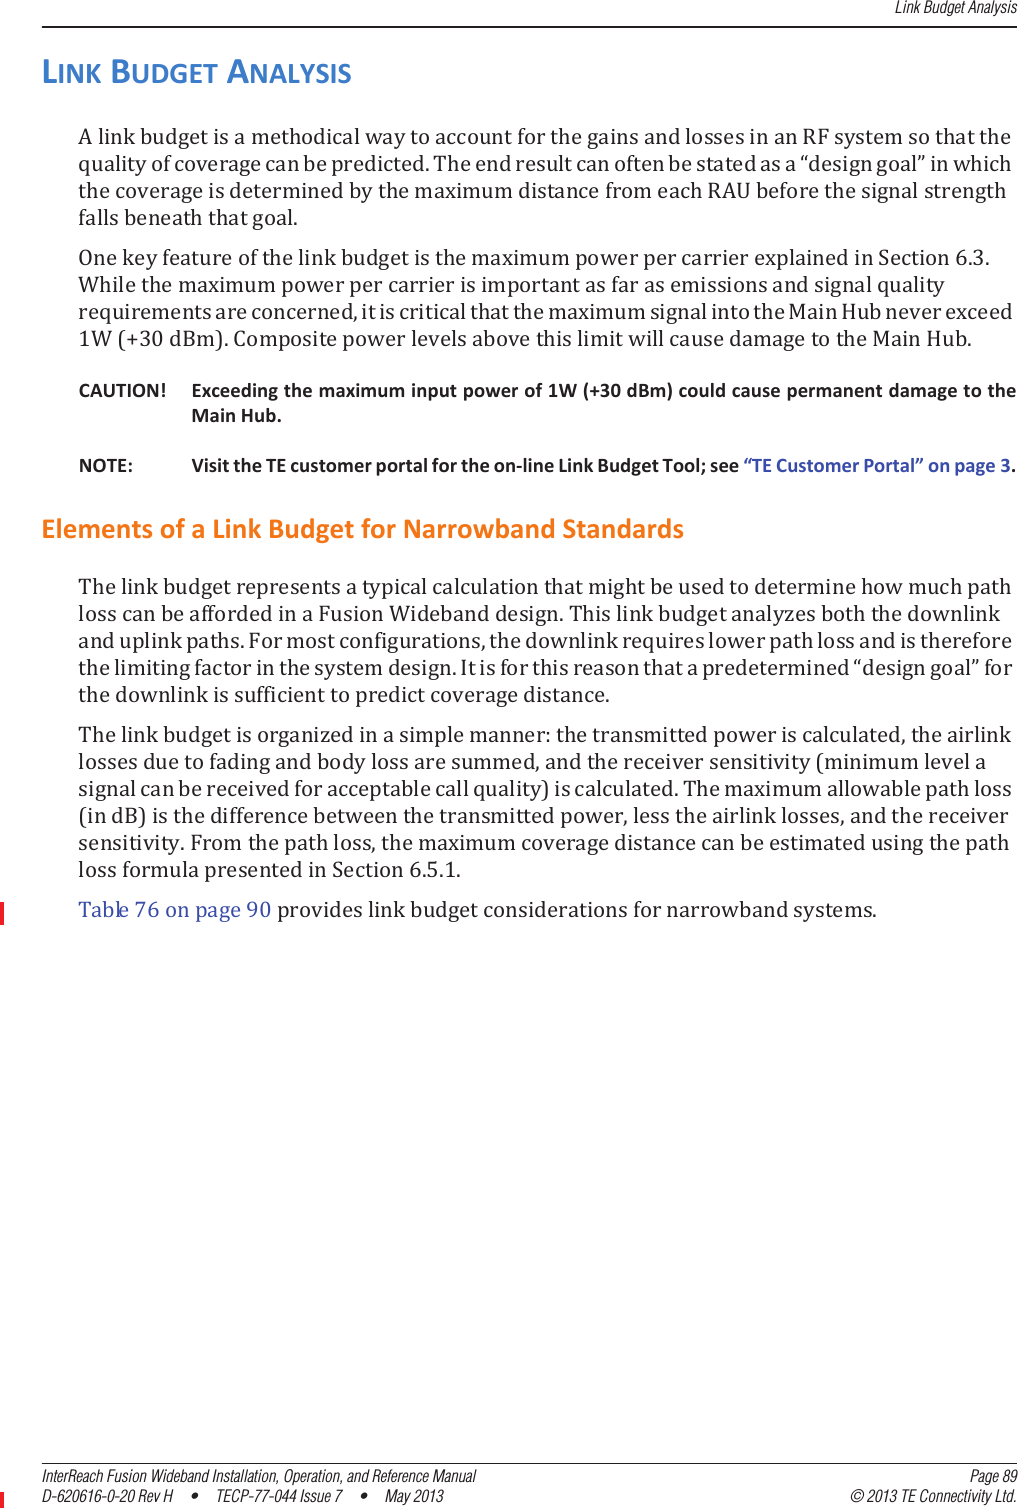 Link Budget AnalysisInterReach Fusion Wideband Installation, Operation, and Reference Manual Page 89D-620616-0-20 Rev H  •  TECP-77-044 Issue 7  •  May 2013 © 2013 TE Connectivity Ltd.LINKBUDGETANALYSISǤǲǳǤ͸Ǥ͵ǤǡͳȋΪ͵ͲȌǤǤCAUTION! Exceedingthemaximuminputpowerof1W(+30dBm)couldcausepermanentdamagetotheMainHub.NOTE: VisittheTEcustomerportalfortheonͲlineLinkBudgetTool;see“TECustomerPortal”onpage3.ElementsofaLinkBudgetforNarrowbandStandardsǤǤǡǤǲǳǤǣǡǡȋȌǤȋȌǡǡǤǡ͸ǤͷǤͳǤ͹͸ͻͲǤ